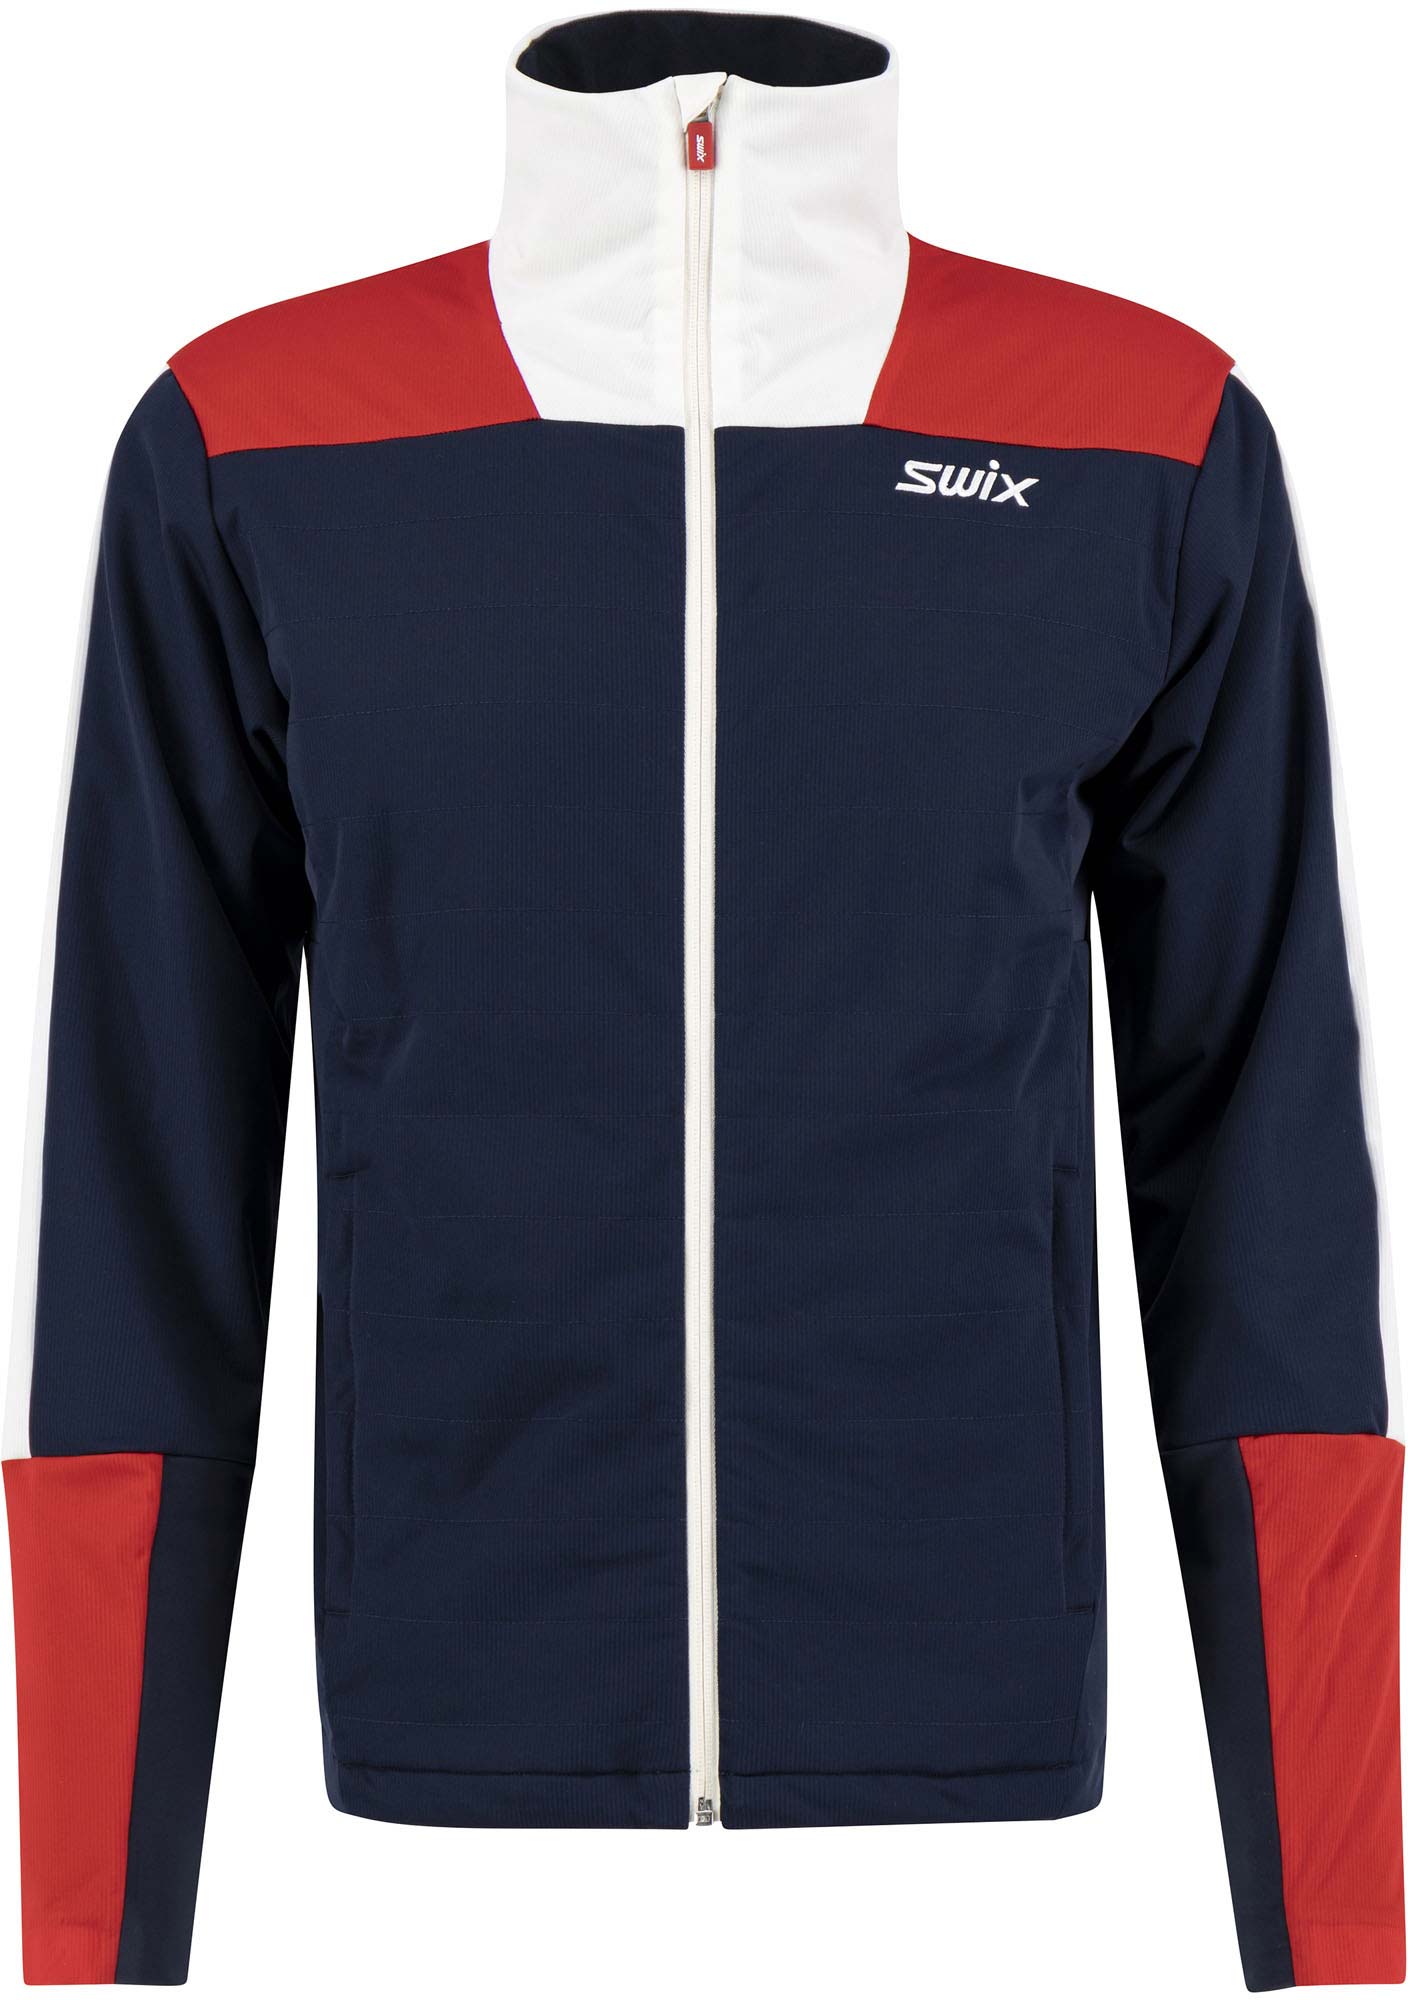 Men’s cross-country ski jacket